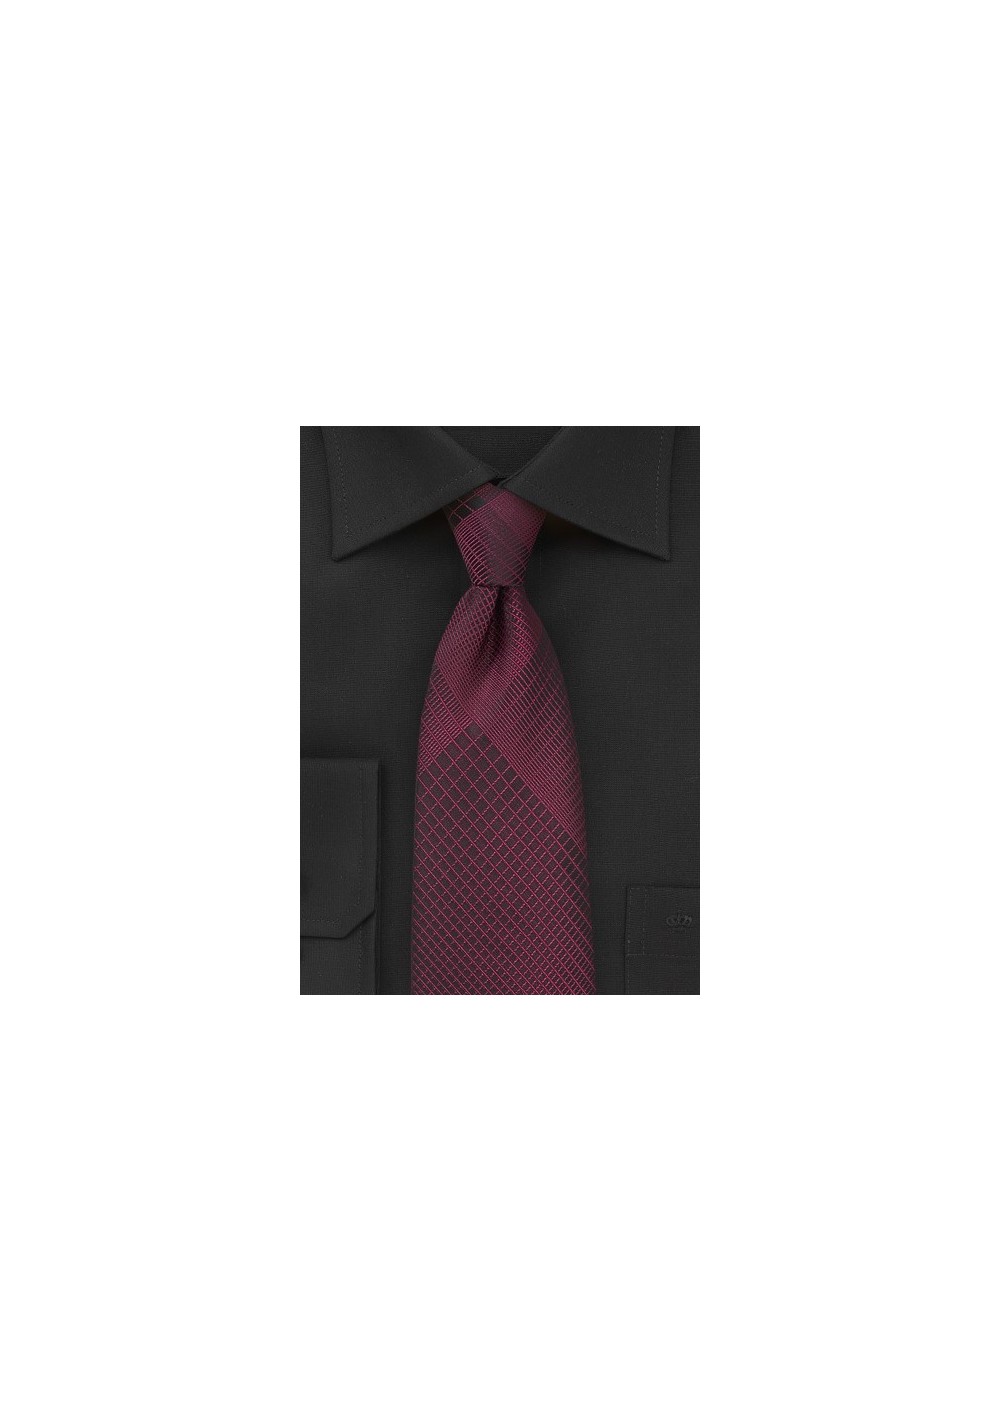 Trendy Plaid Designer Tie in Black and Rosewood